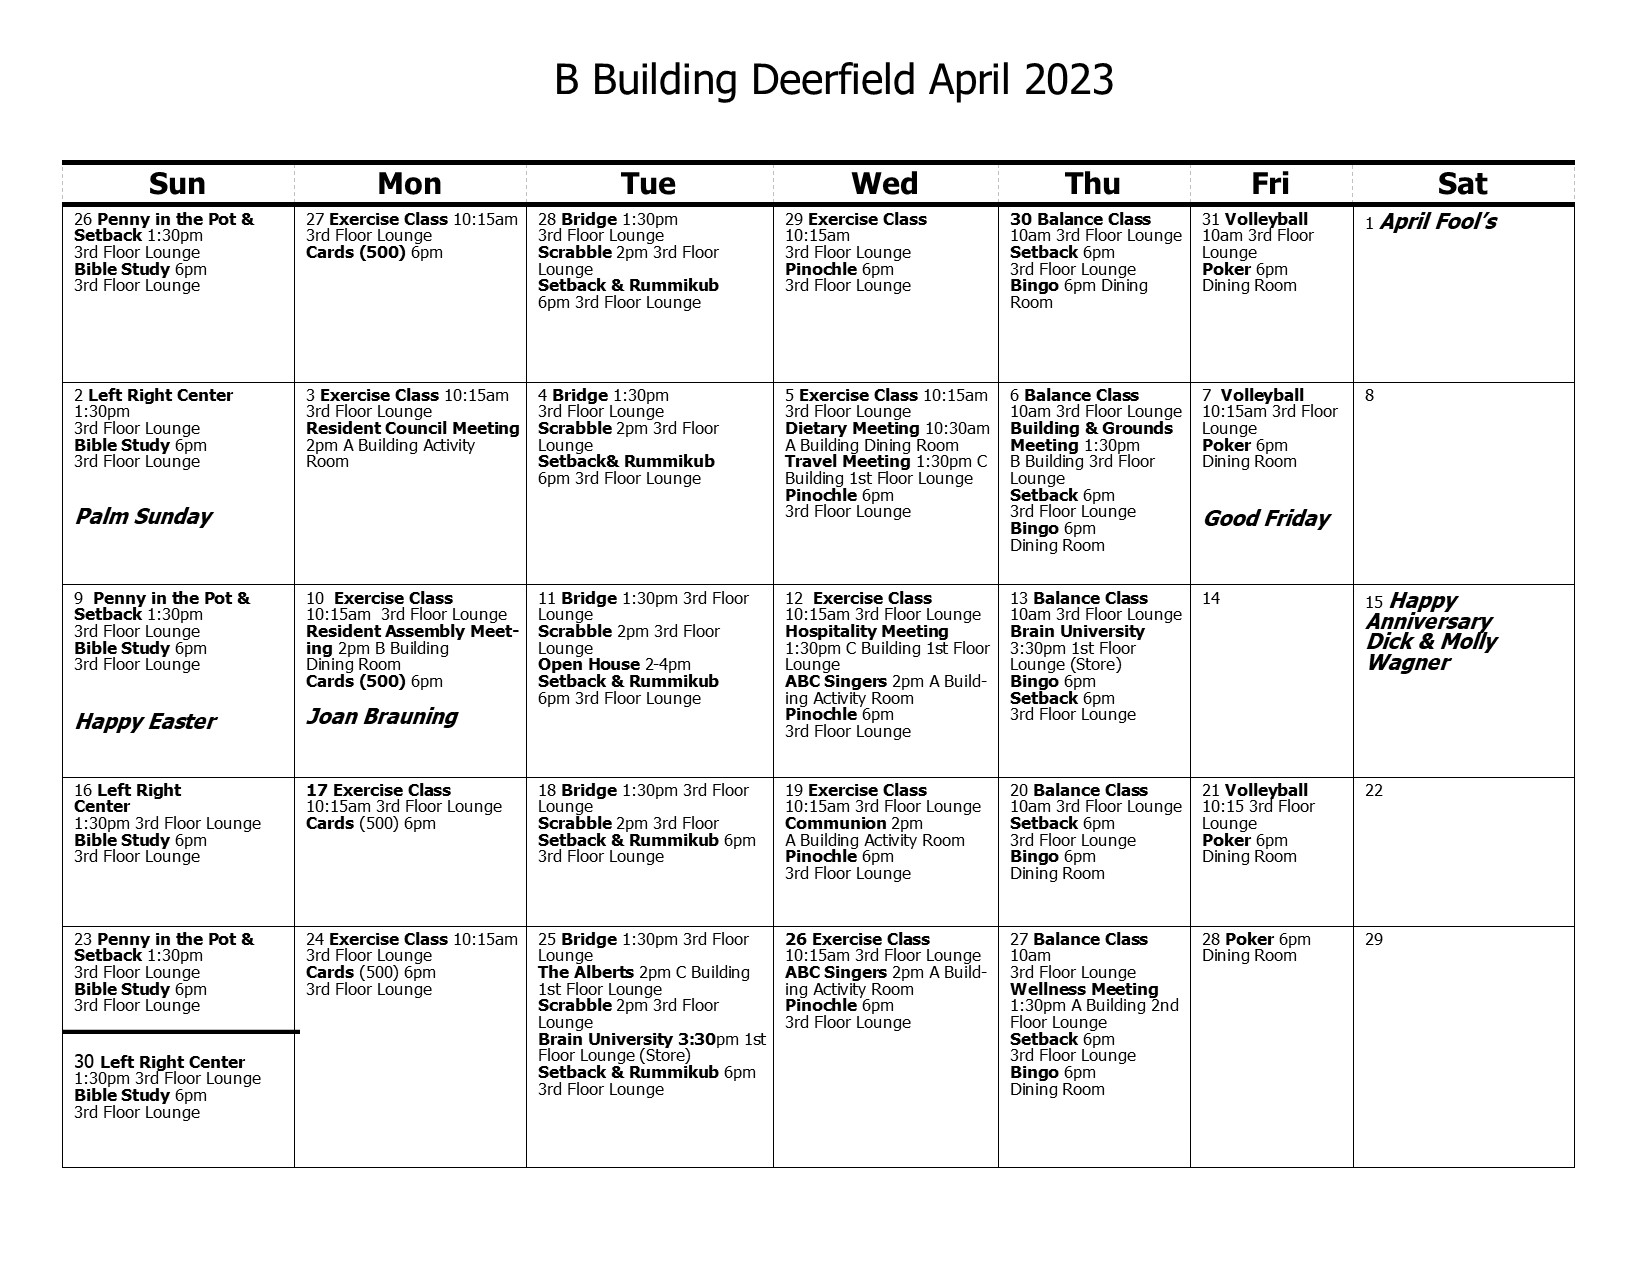 B Building Calendar April 2023